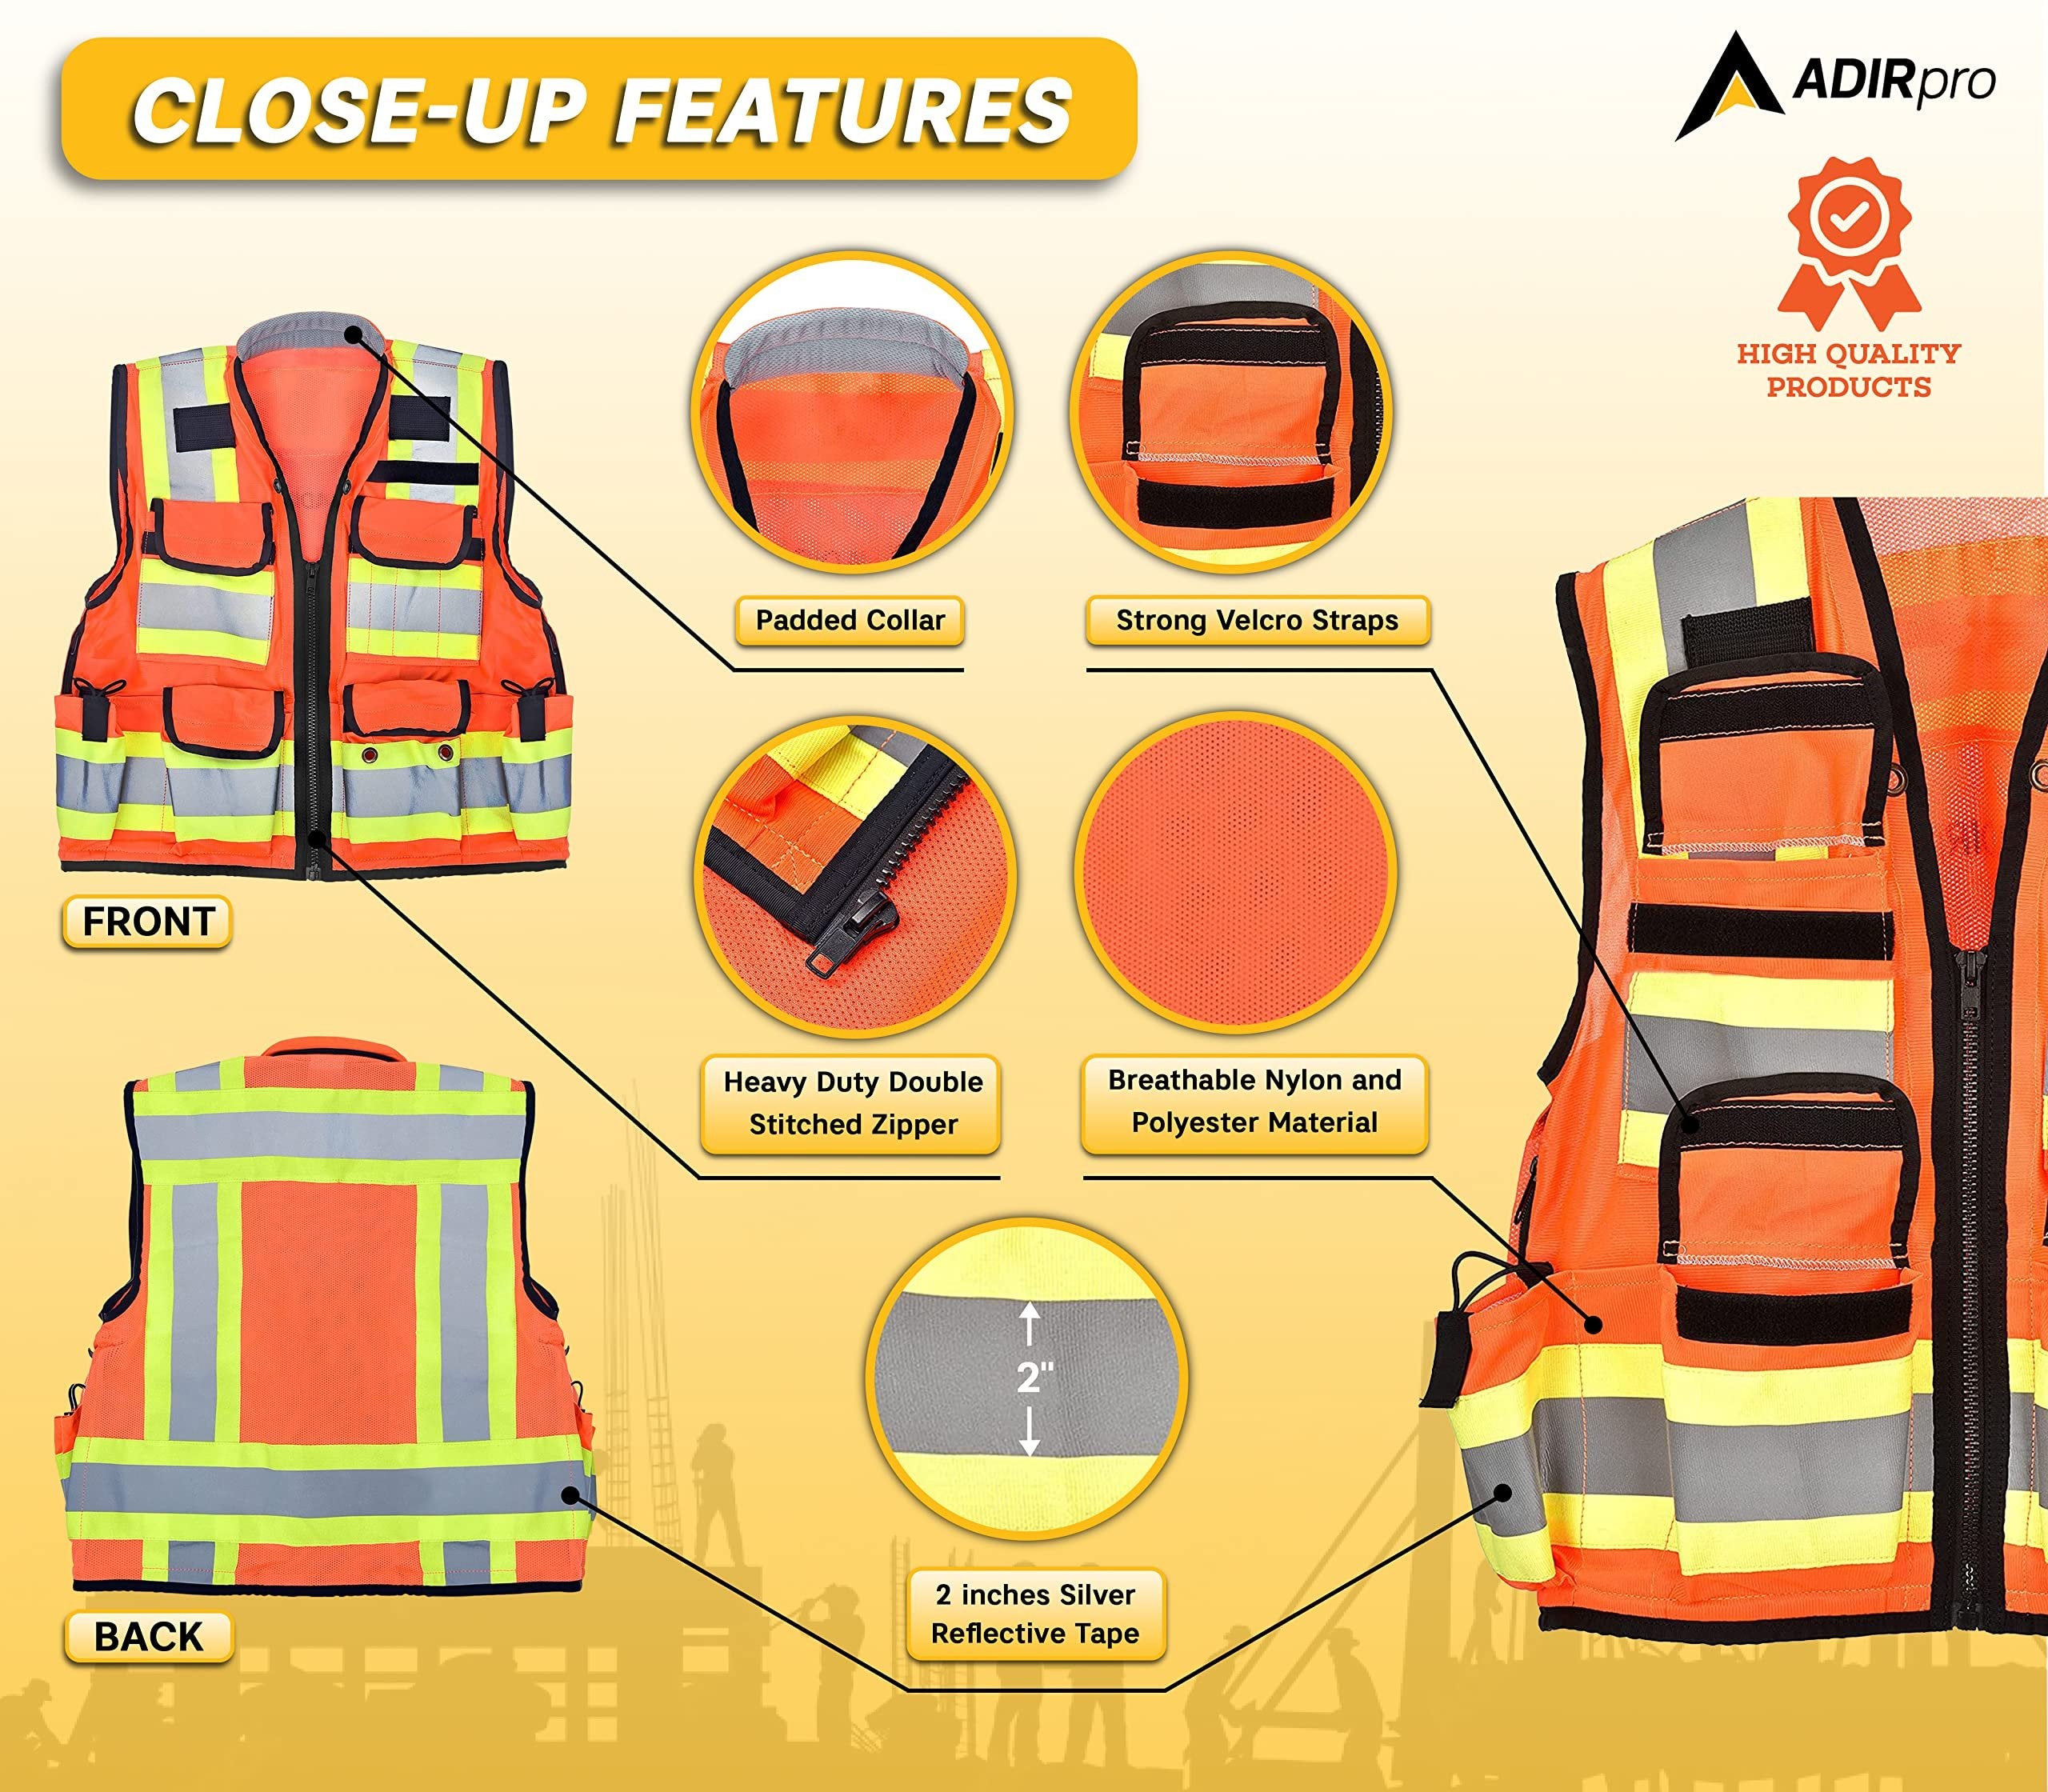 AdirPro Surveyor Safety Vest with Pockets - High visibility Reflective Construction Vest for Men - Class 2 Heavy Duty Vest ANSI Complaint for Contractors, Surveyors, & Foreman Safety Vest (Orange, Medium)